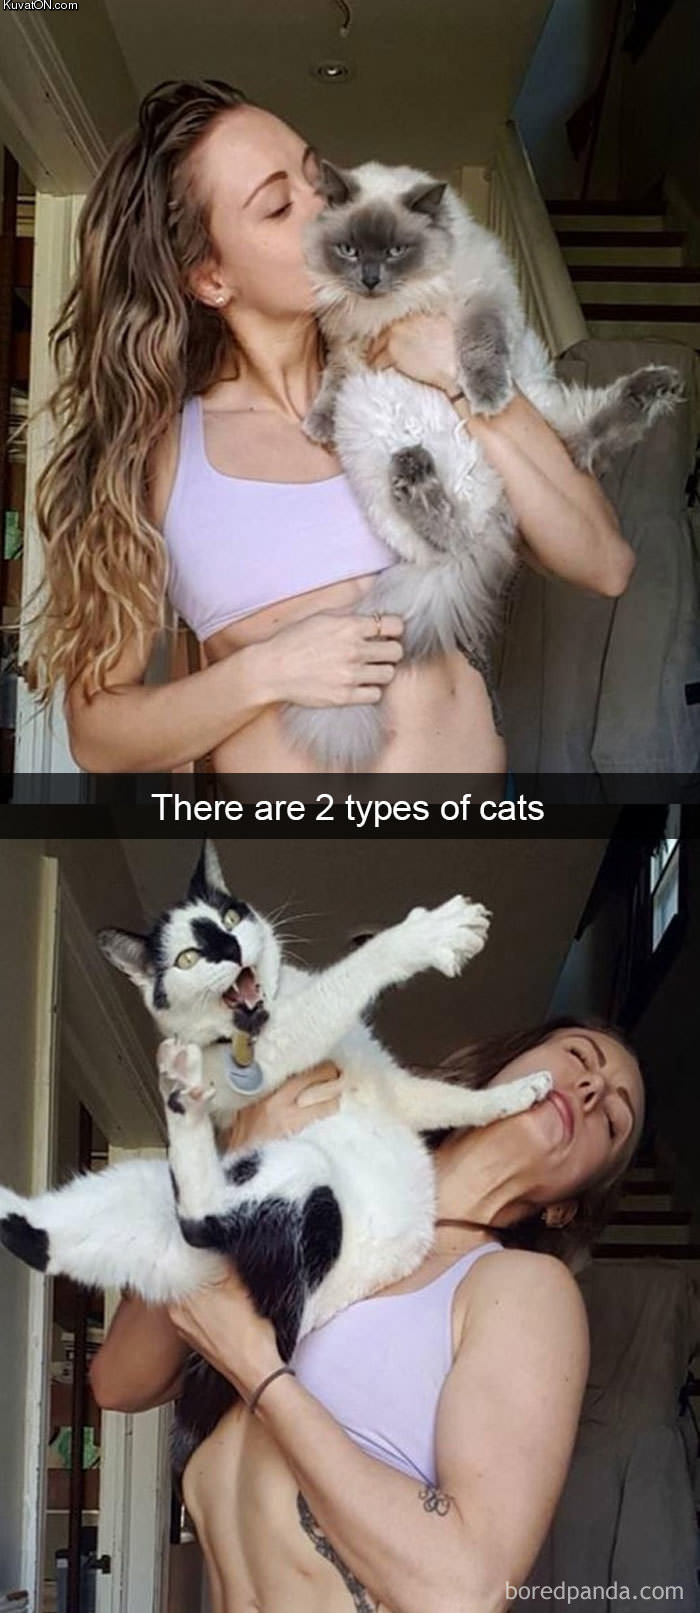 twotypesofcats.jpg